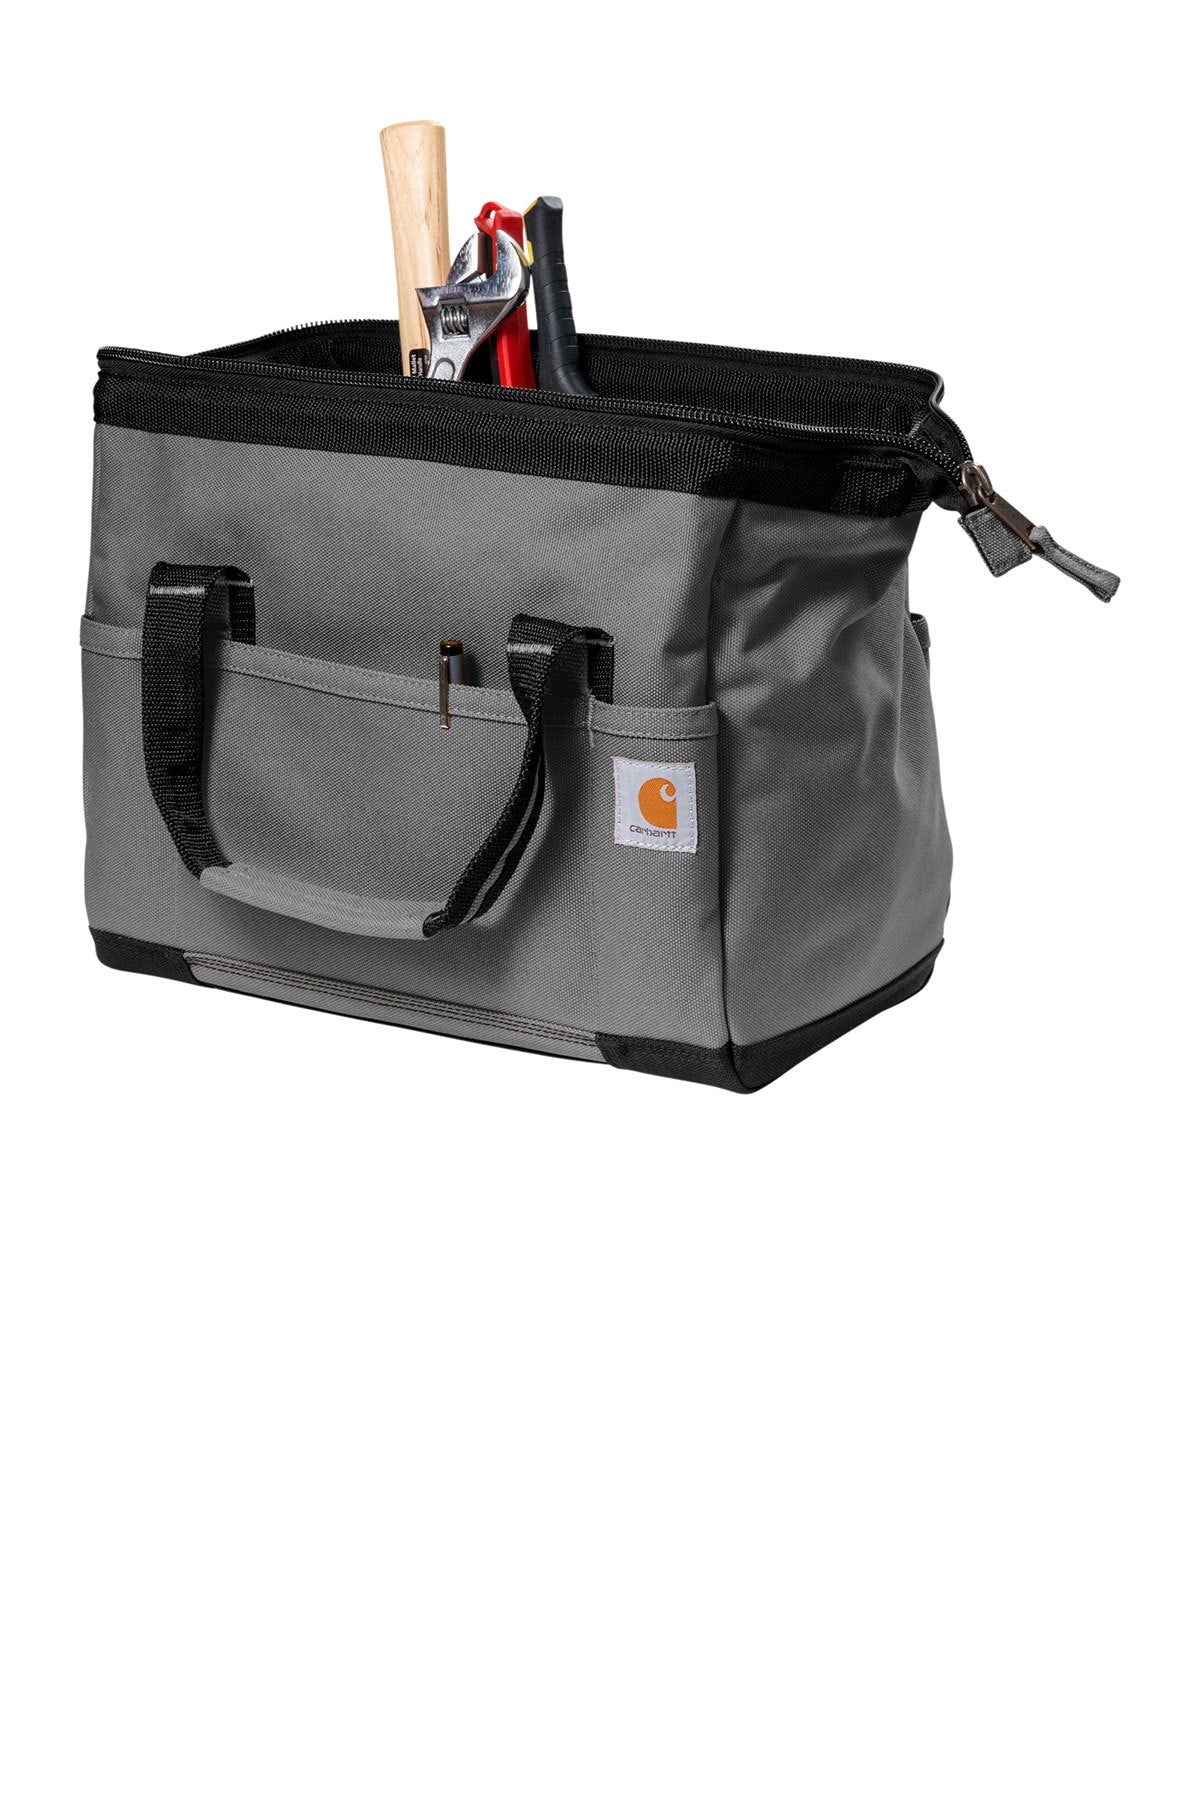 CT89240105 Carhartt® Foundry Series 14” Tool Bag